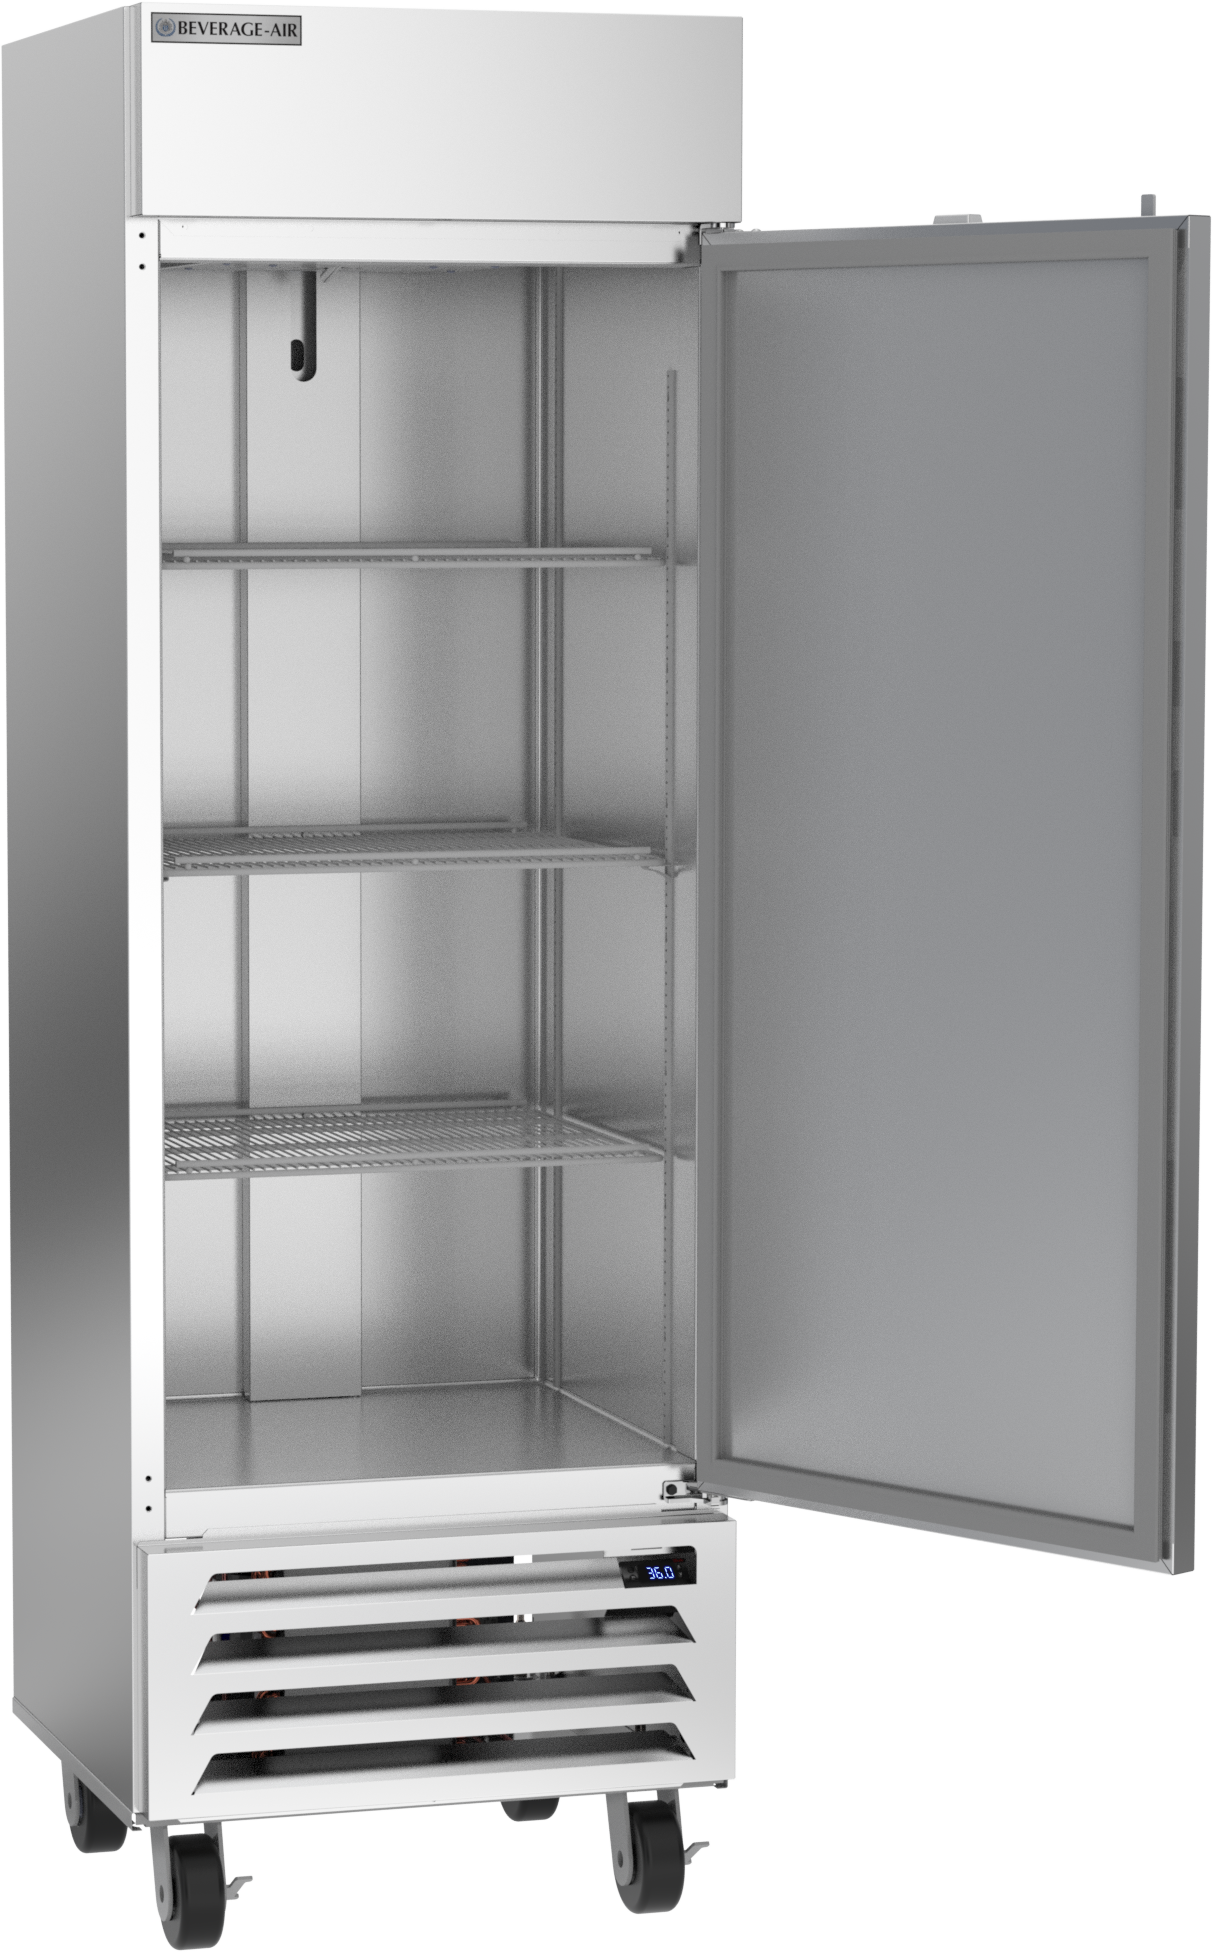 Beverage-Air HBR19HC-1 27" One Section Solid Door Reach-In Refrigerator